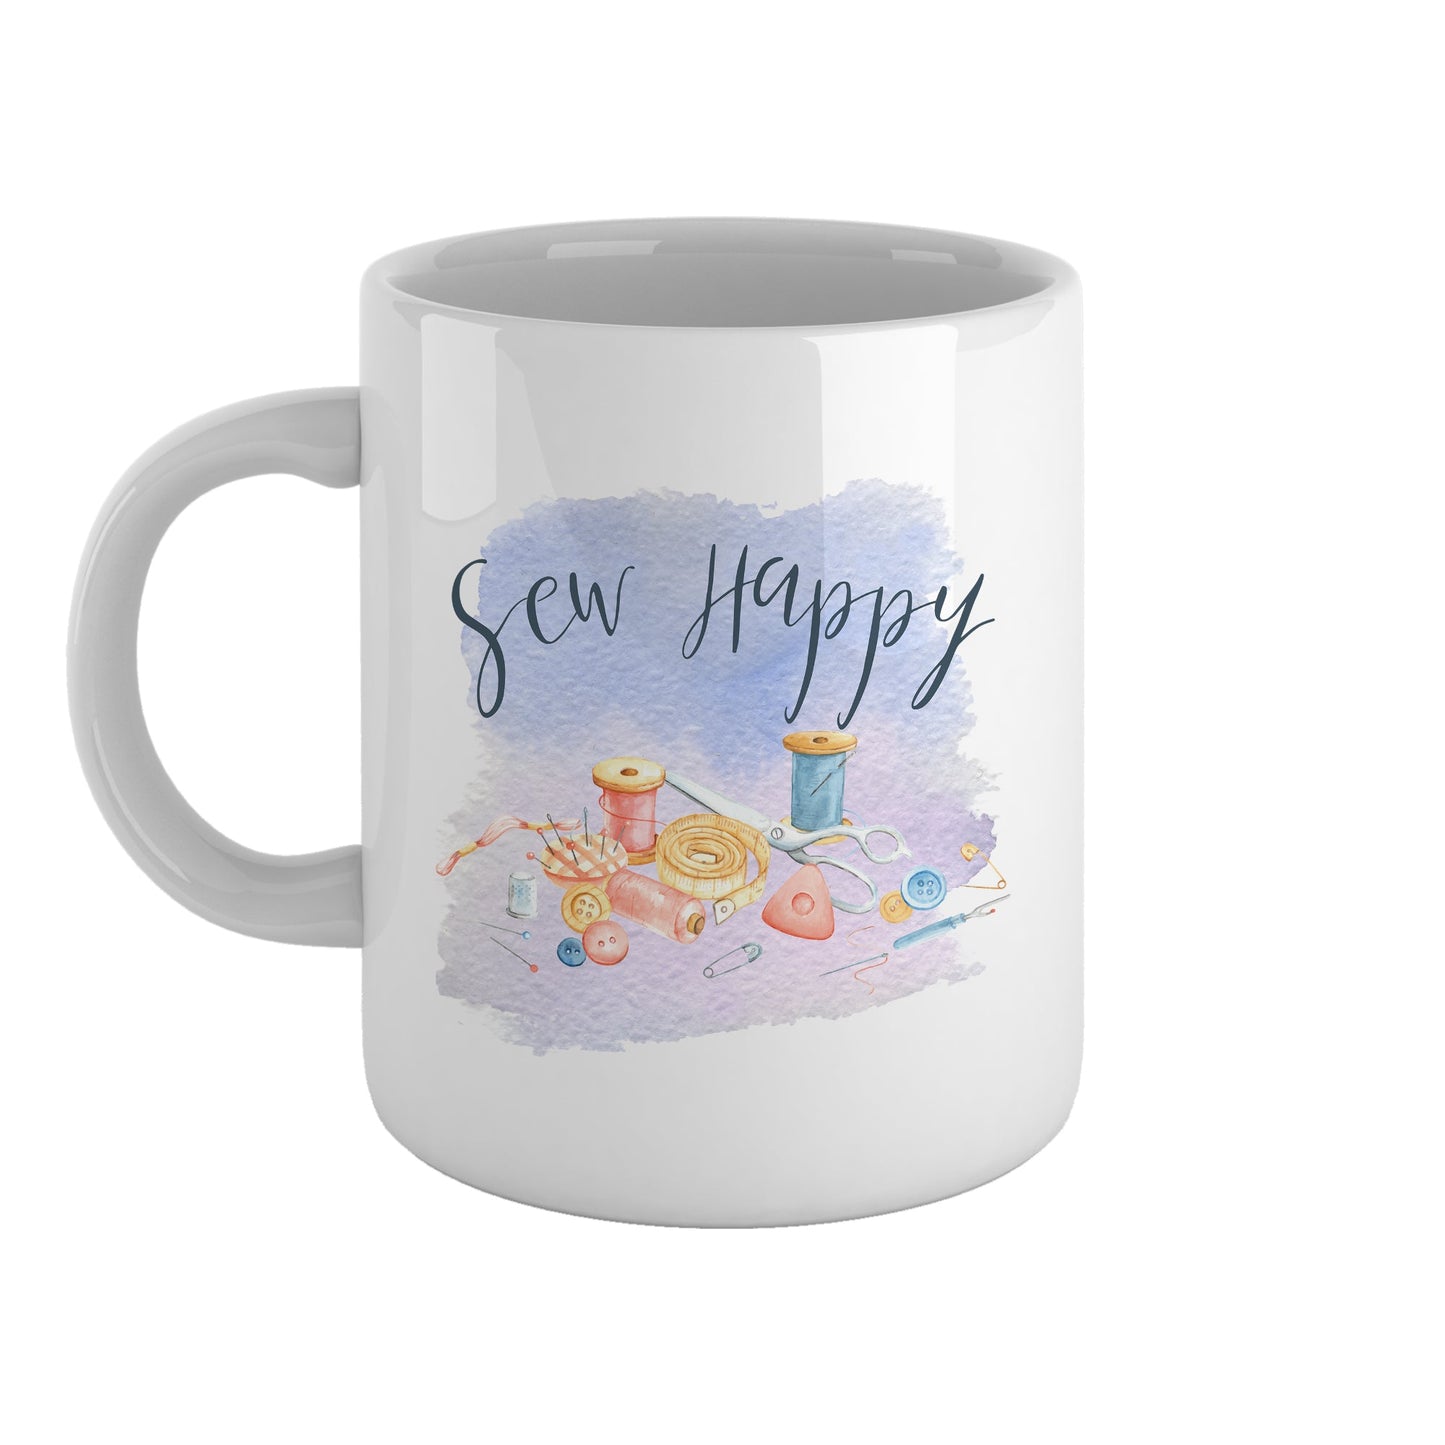 Sew happy | Ceramic mug-Ceramic mug-Adnil Creations